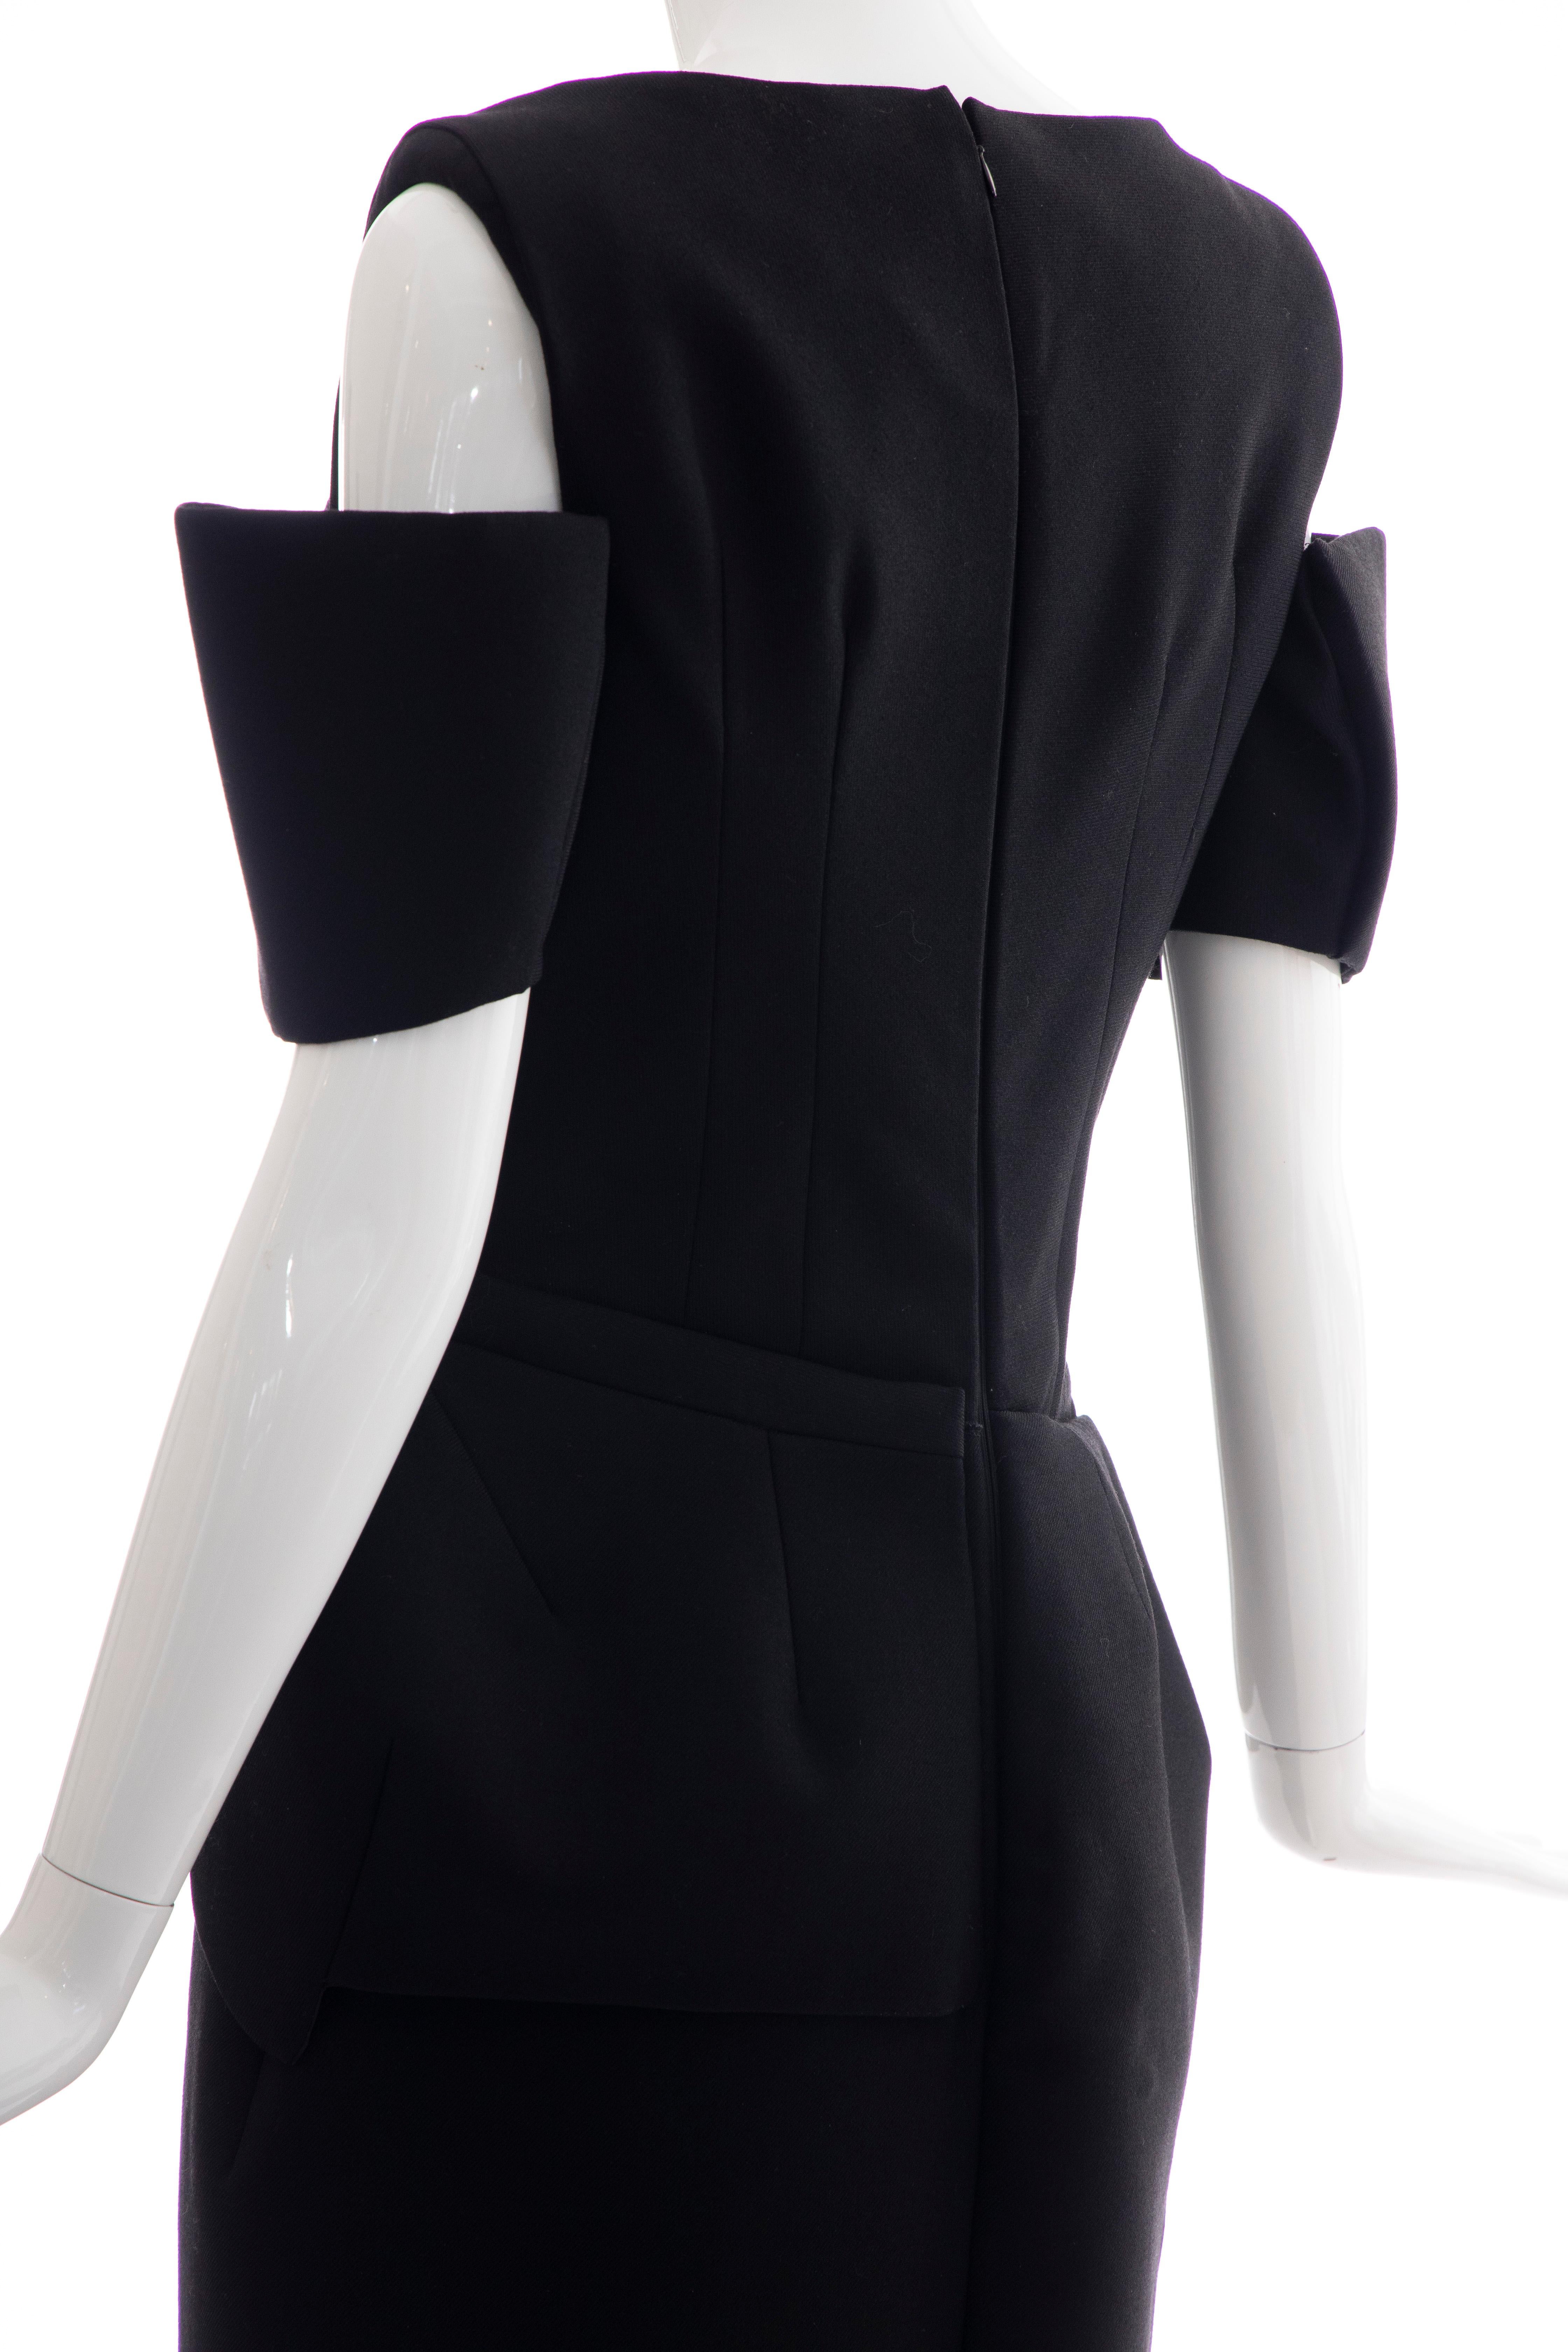 Nicolas Ghesquière for Balenciaga Runway Black Wool Structured Dress, Fall 2008 For Sale 2